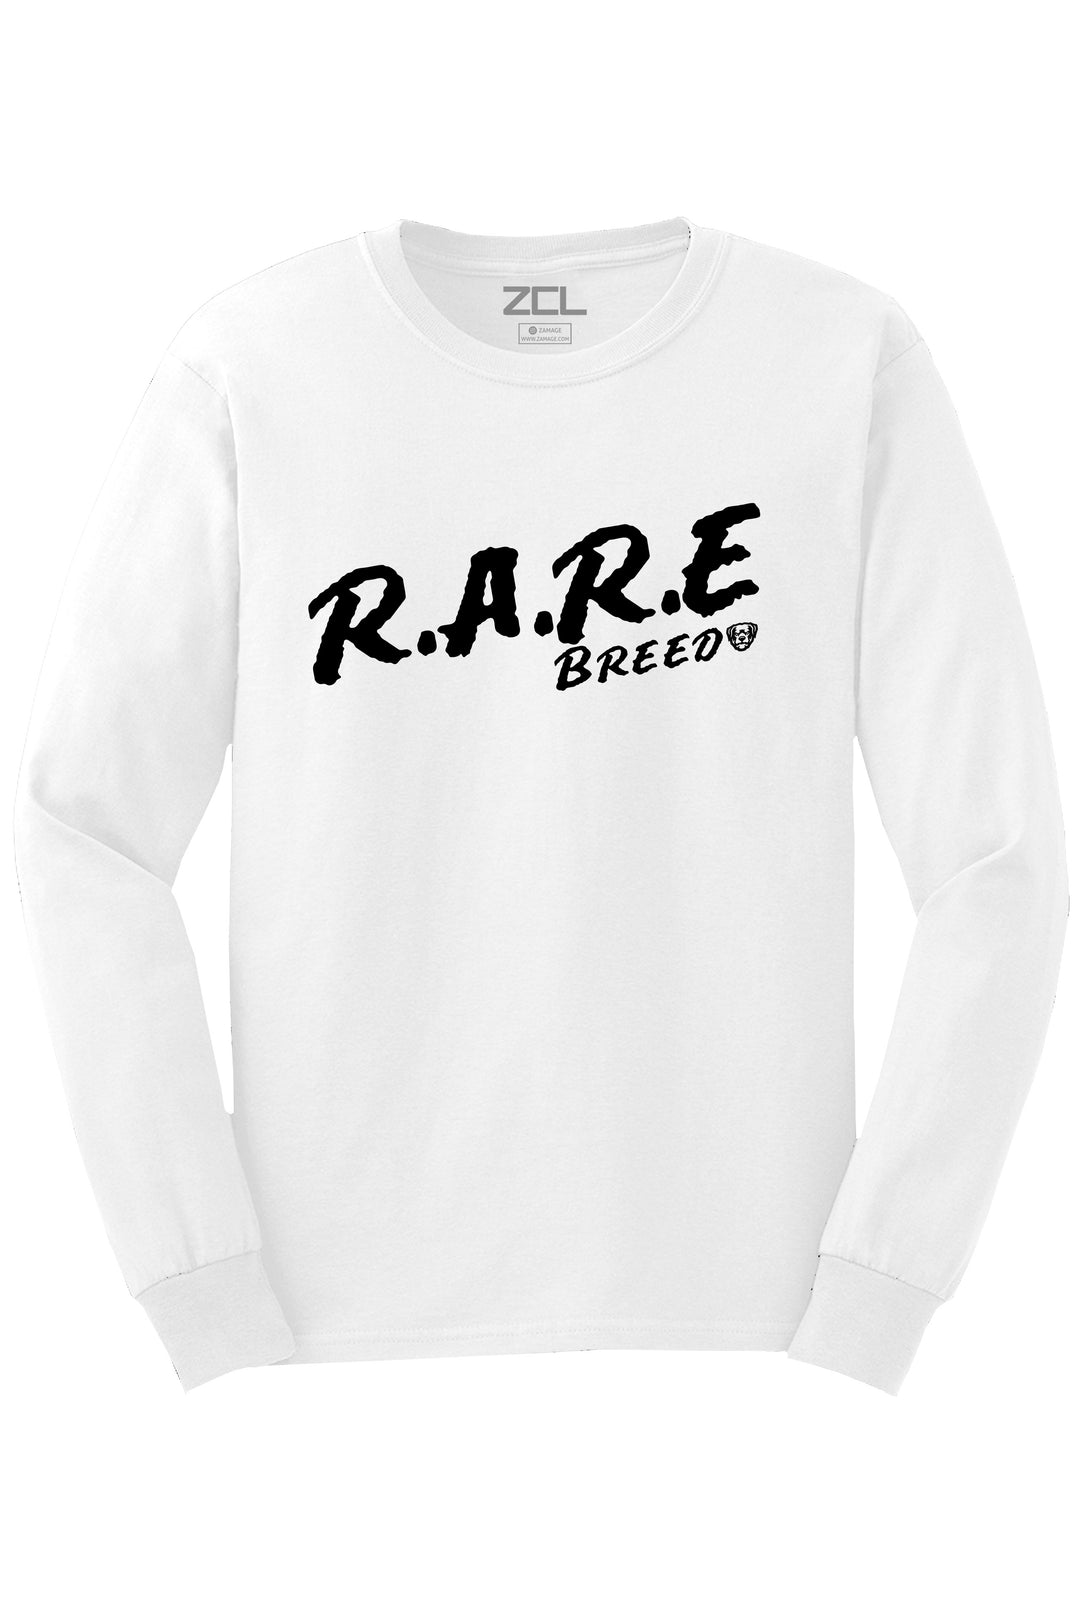 Rare Breed Long Sleeve Tee (Black Logo) - Zamage